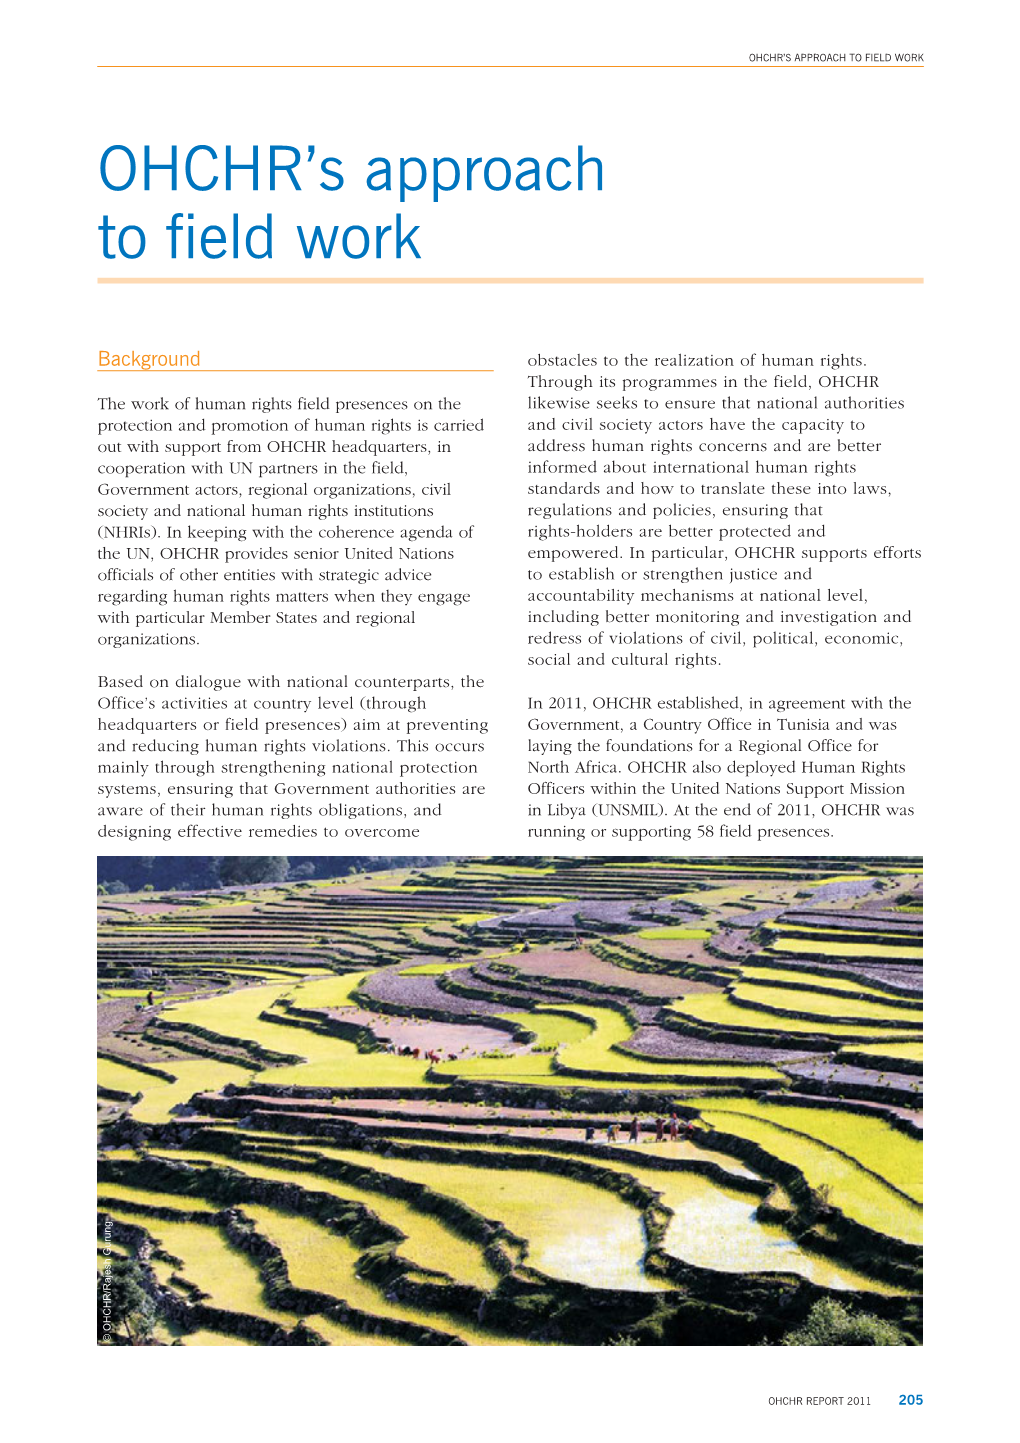 OHCHR's Approach to Field Work